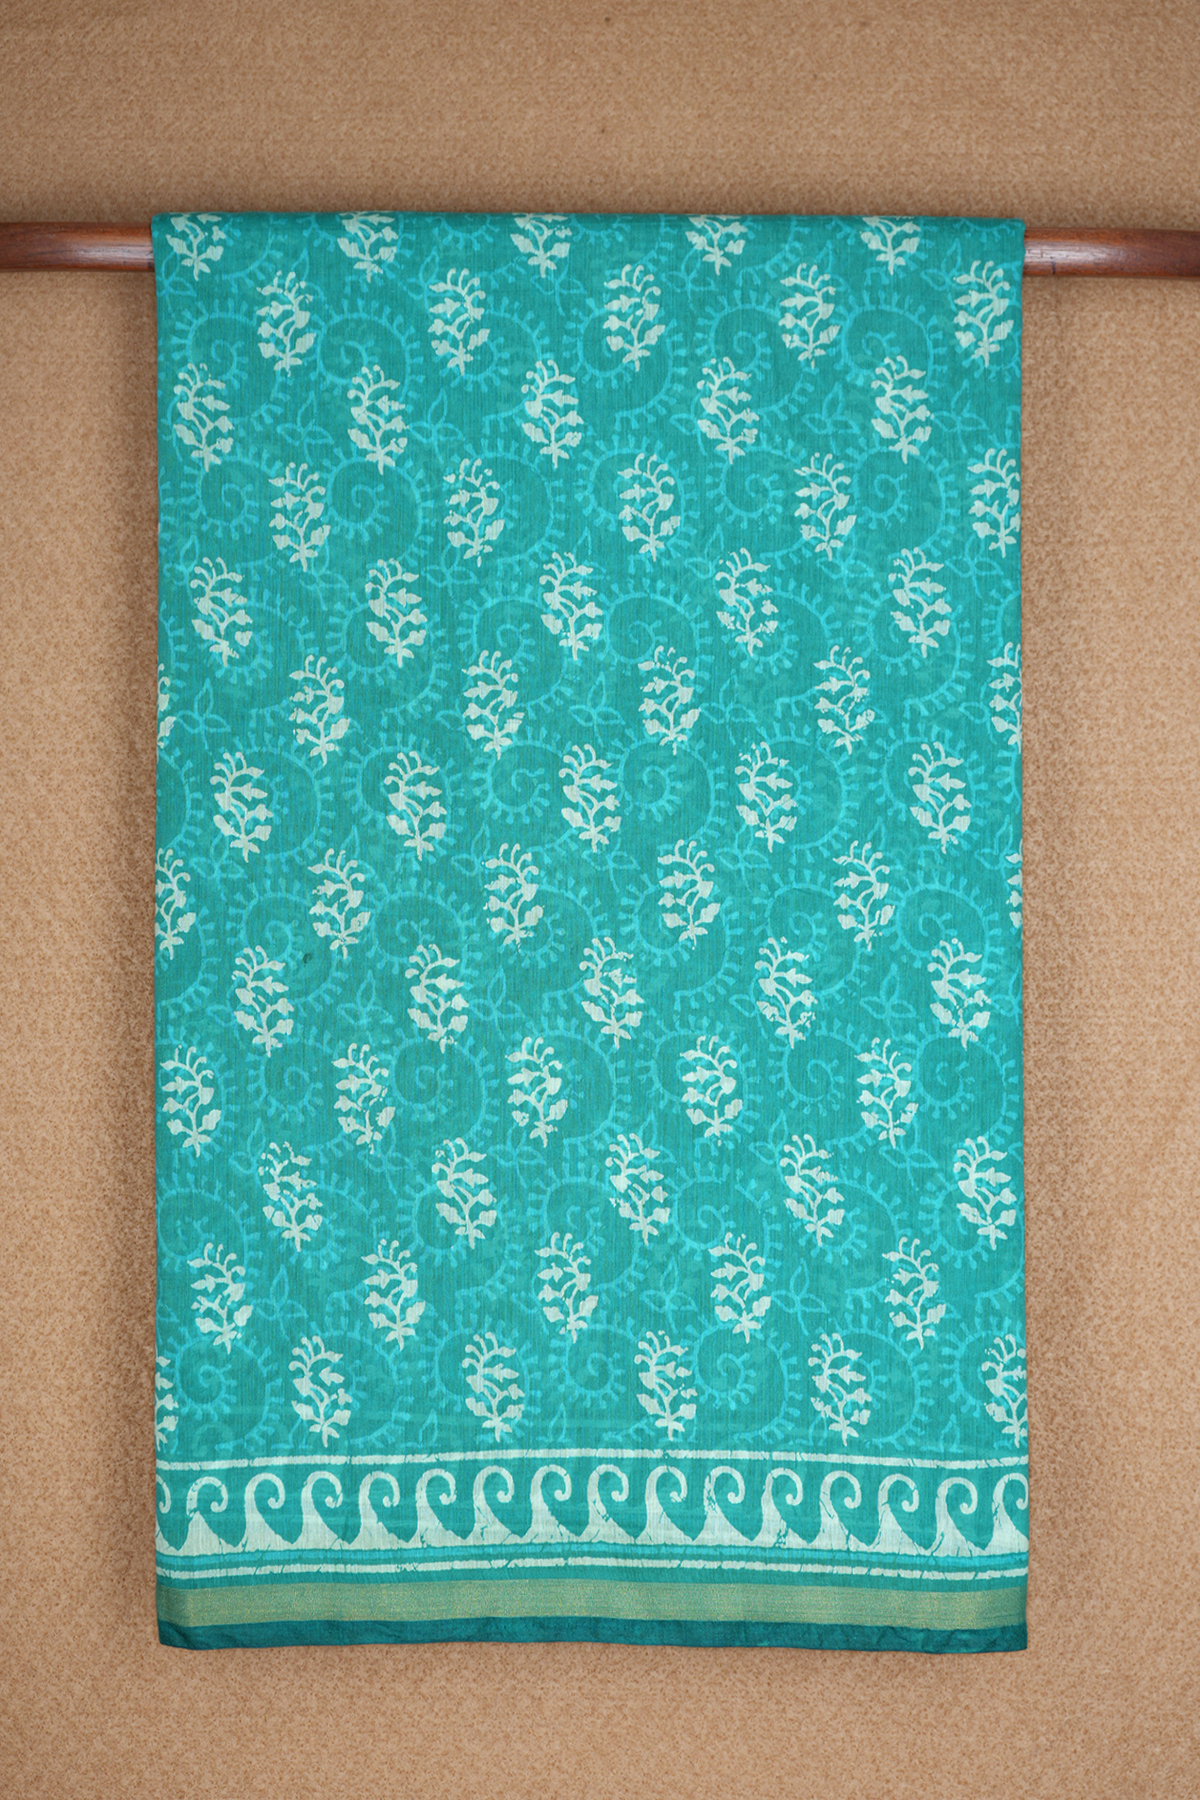 Allover Floral Design Printed Ramar Blue Jaipur Cotton Saree